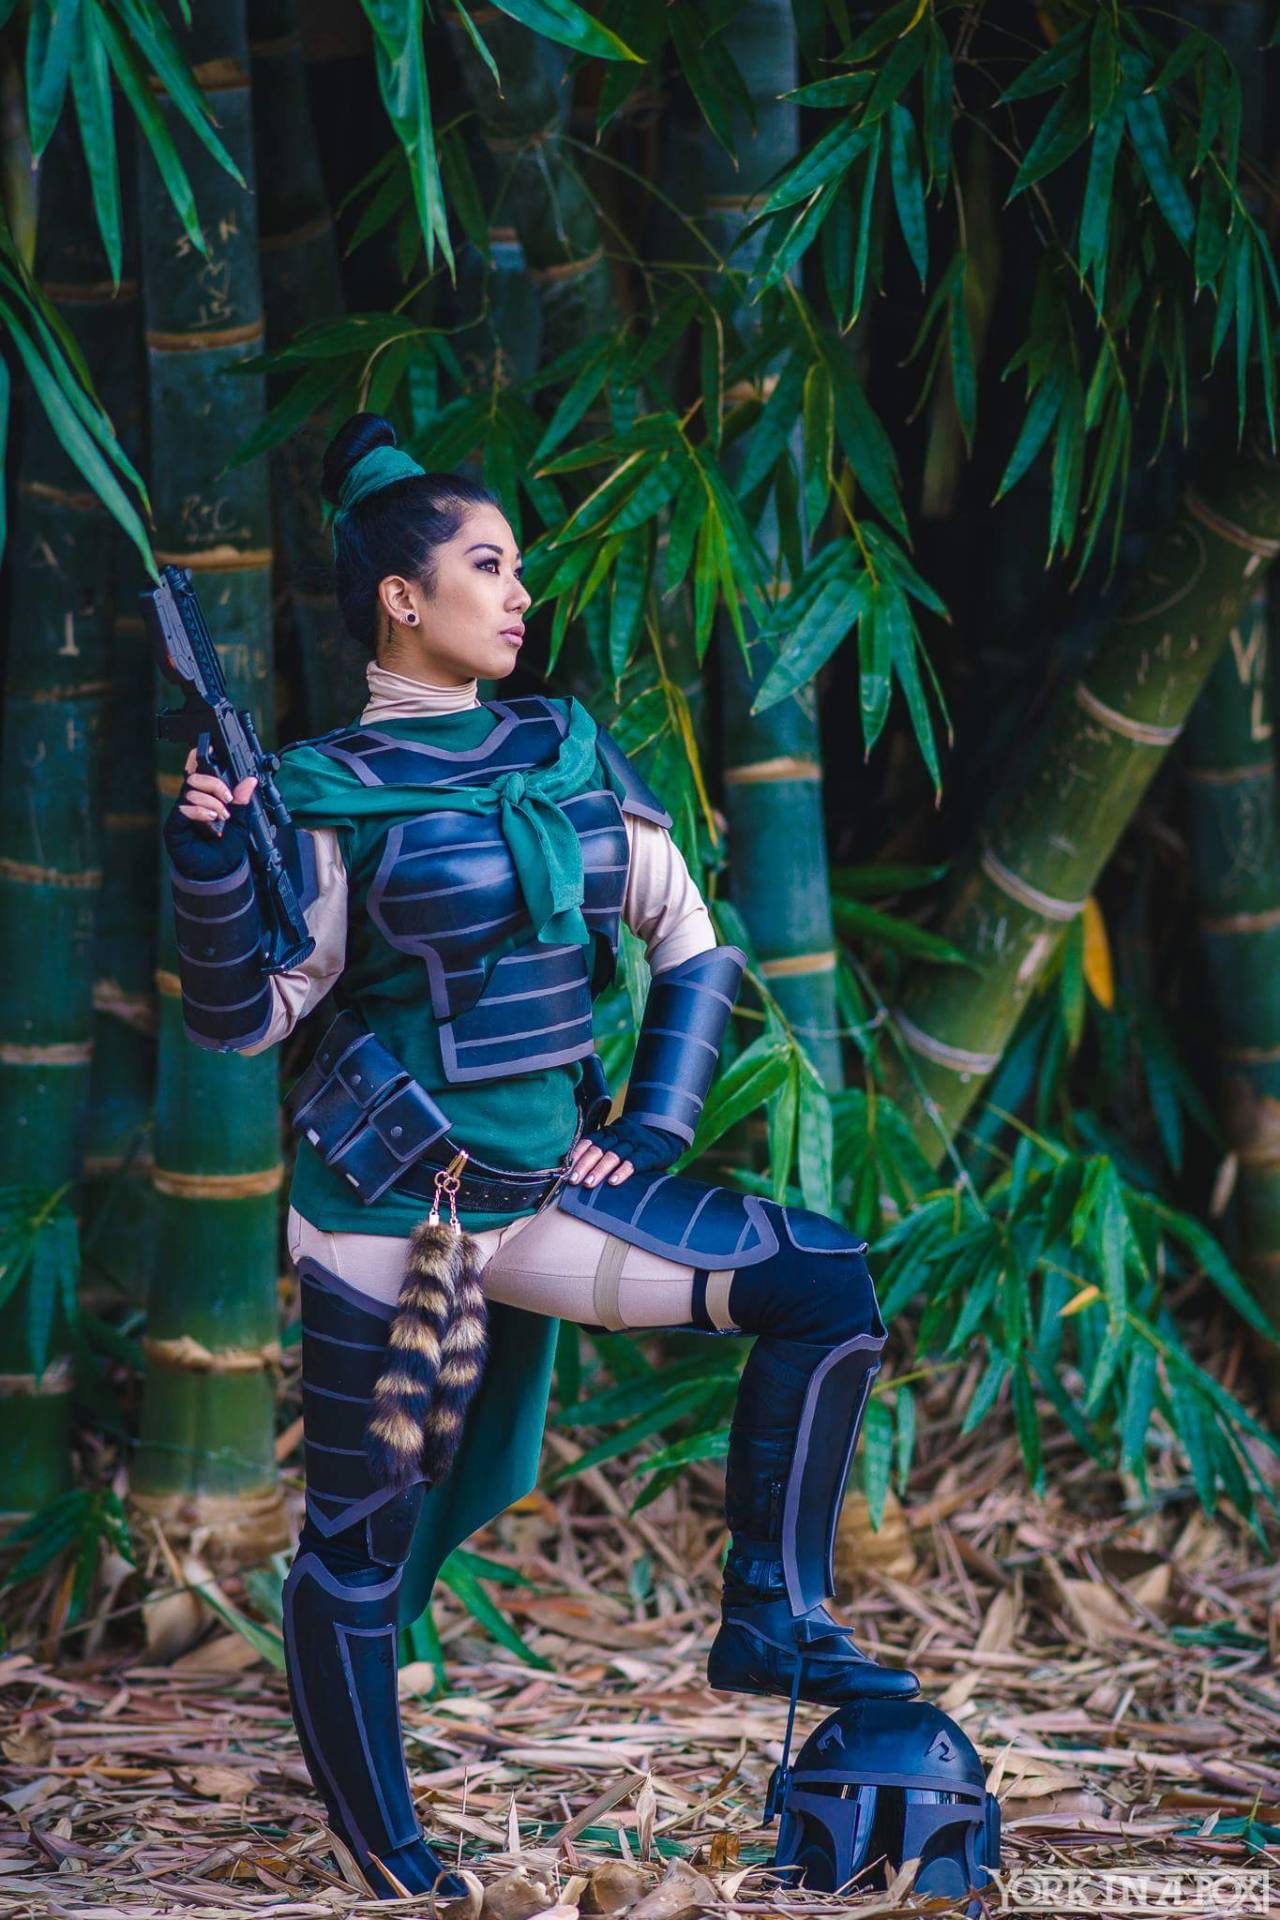 cosplayblog:  Fa Mulan (in Star Wars inspired armor) from Mulan / Star Wars   Cosplayer: